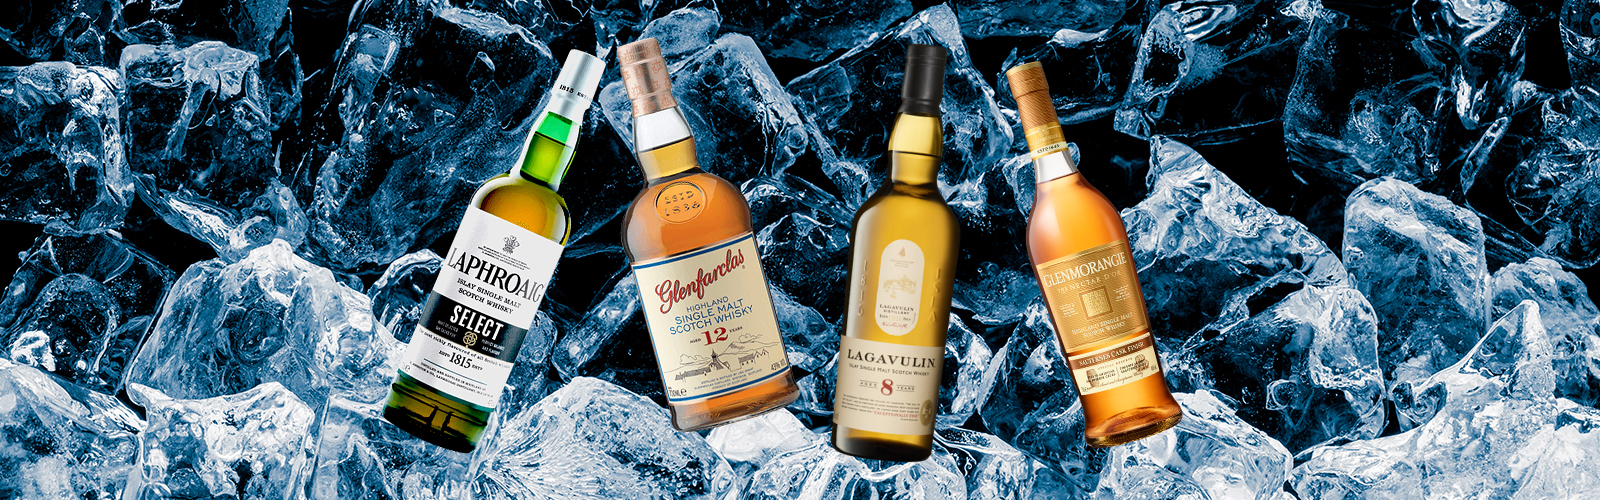 Should you ever put ice in a single malt scotch?